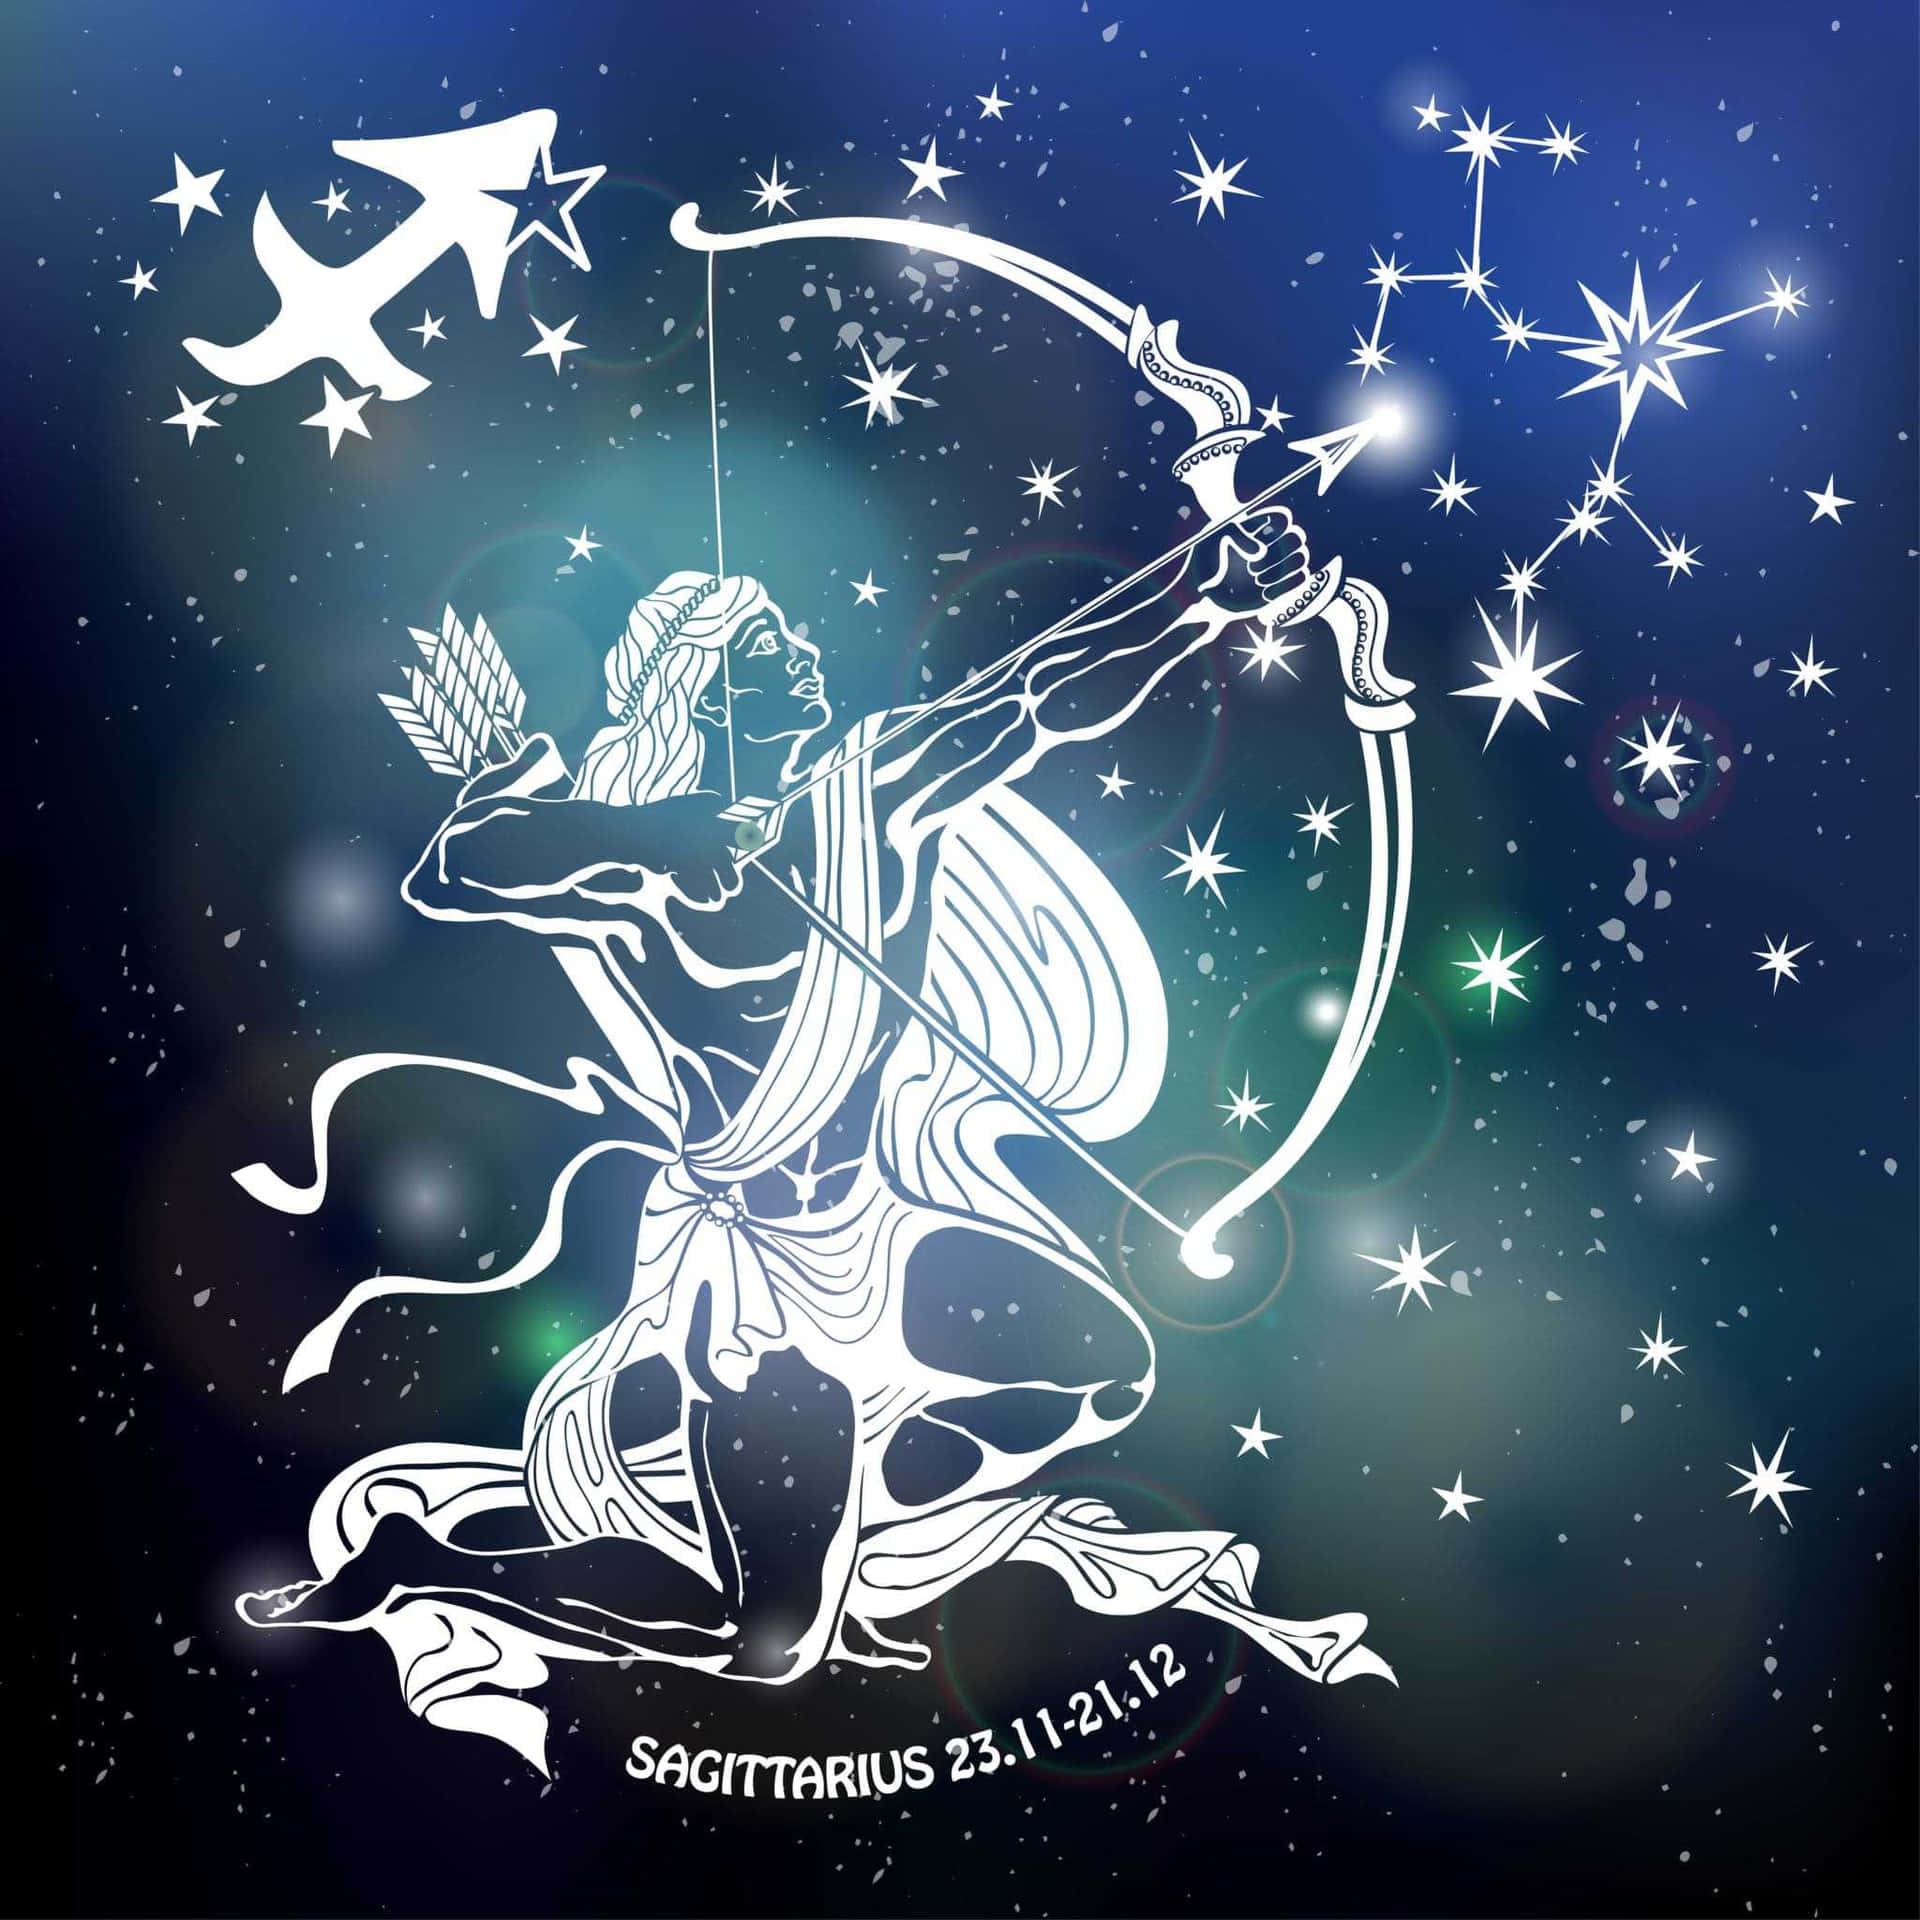 “Aim High!” - Embrace the adventurous spirit of Sagittarius